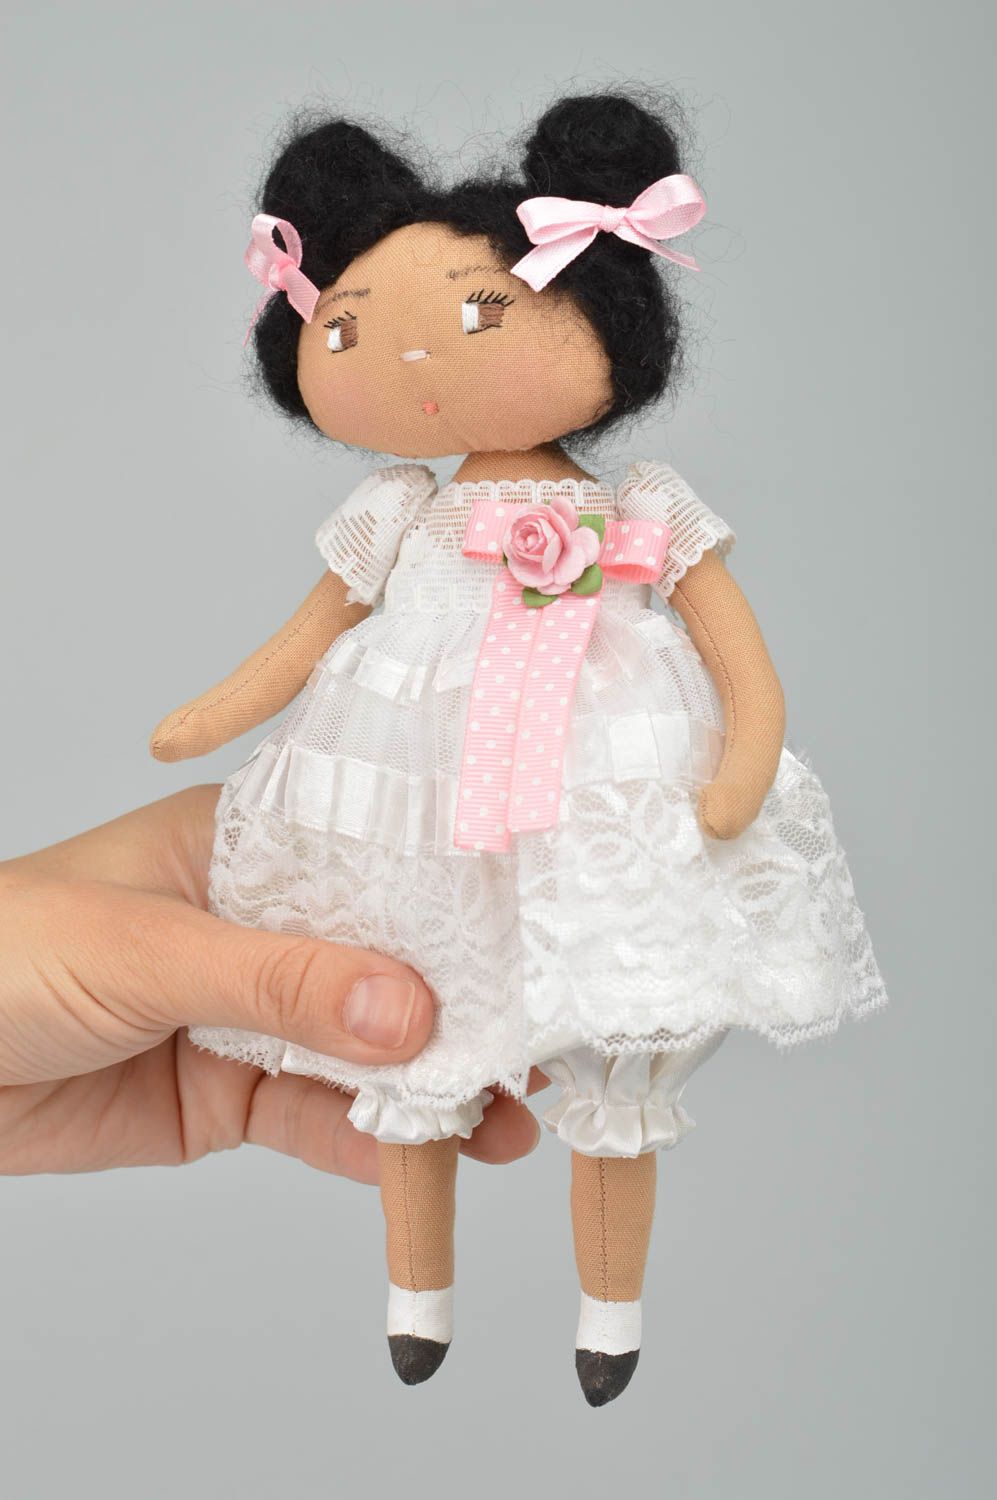 Designer beautiful doll handmade unusual cute toy stylish interior doll photo 2